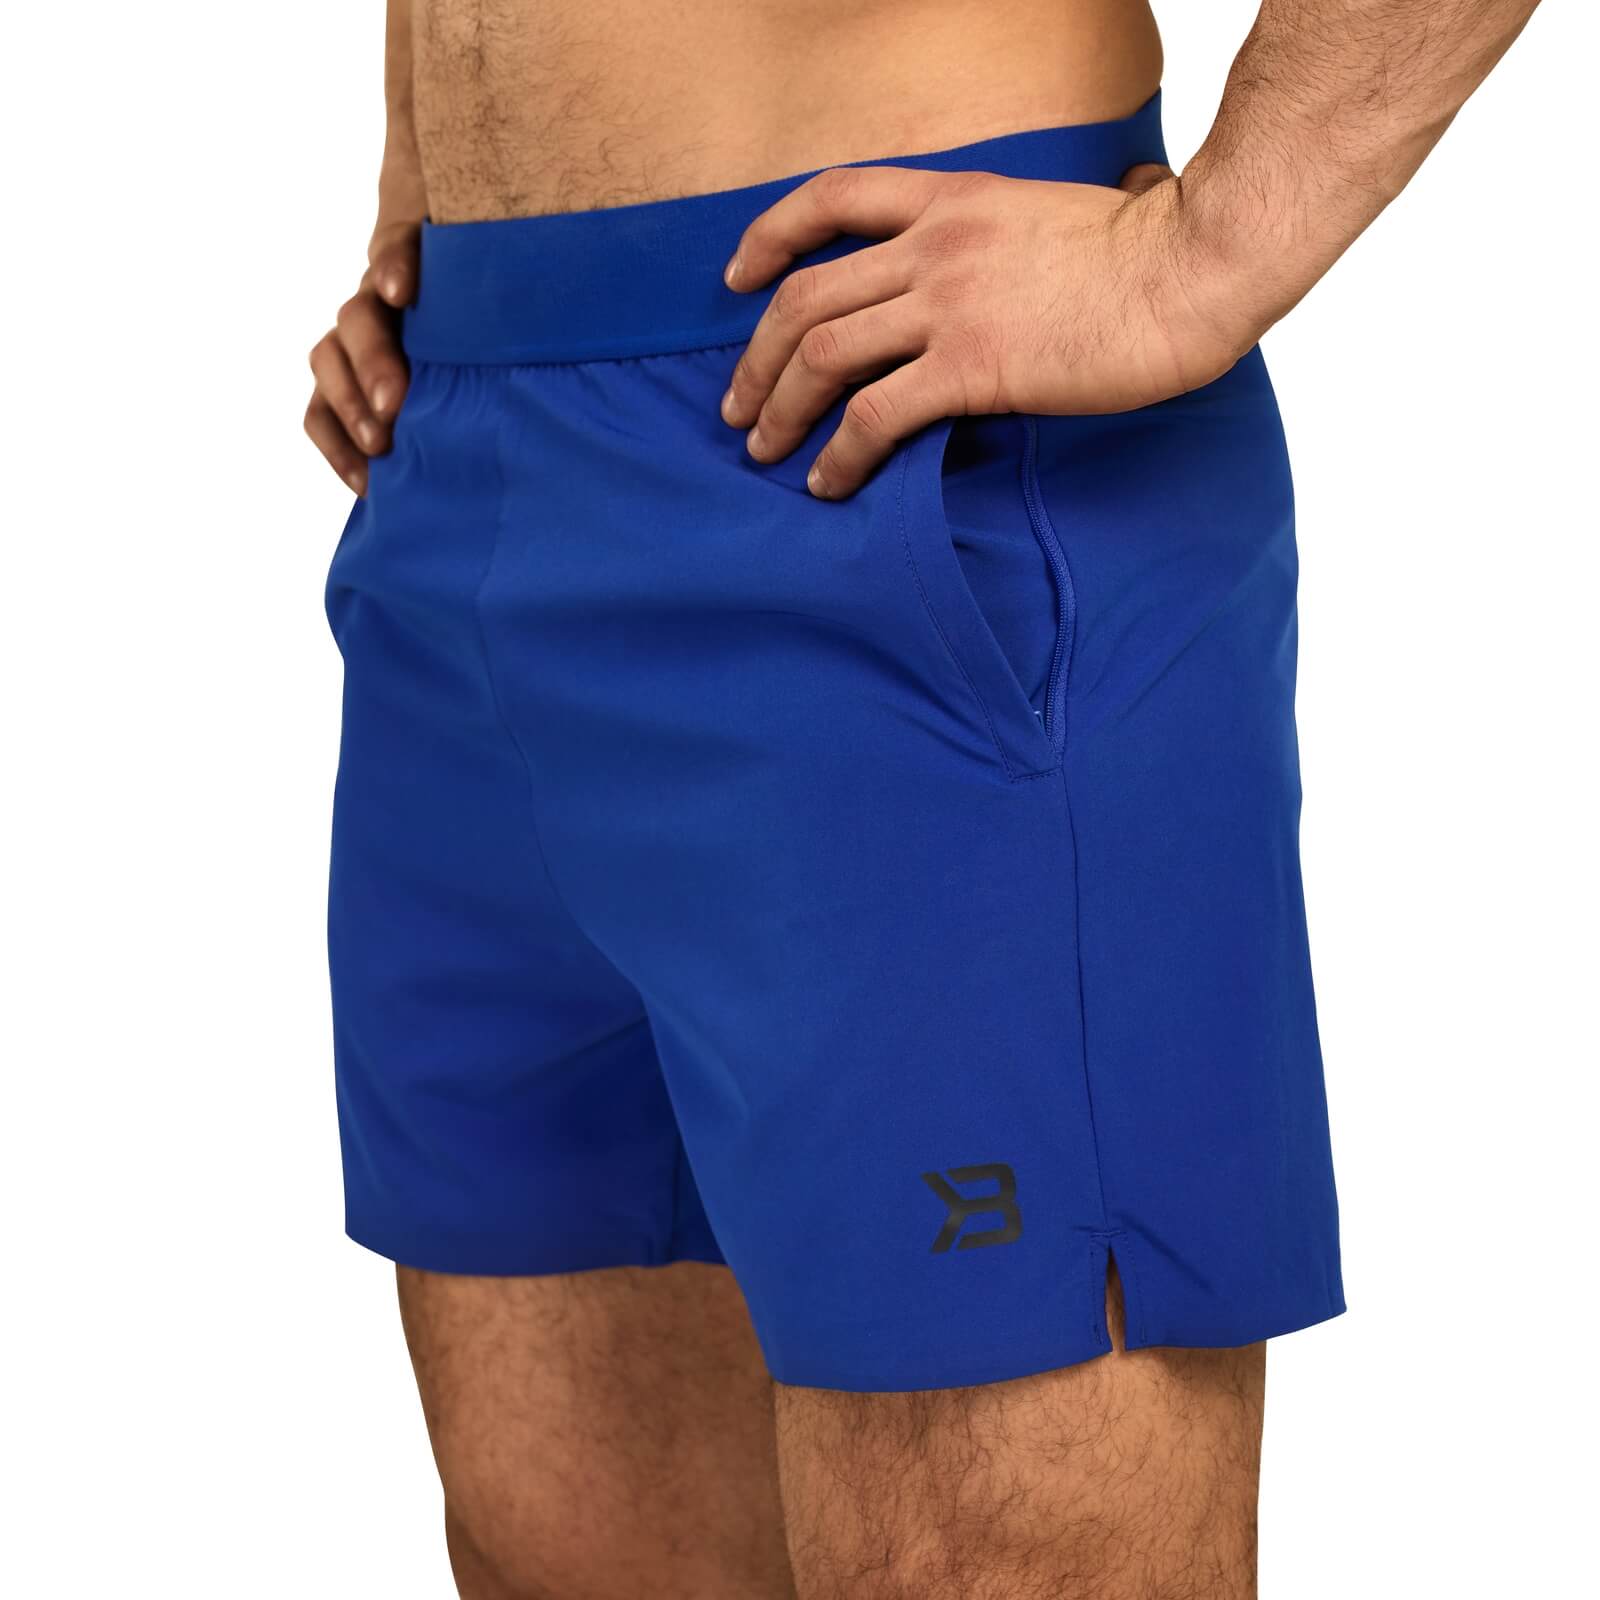 Kolla in Varick Shorts, royal blue, Better Bodies hos SportGymButiken.se